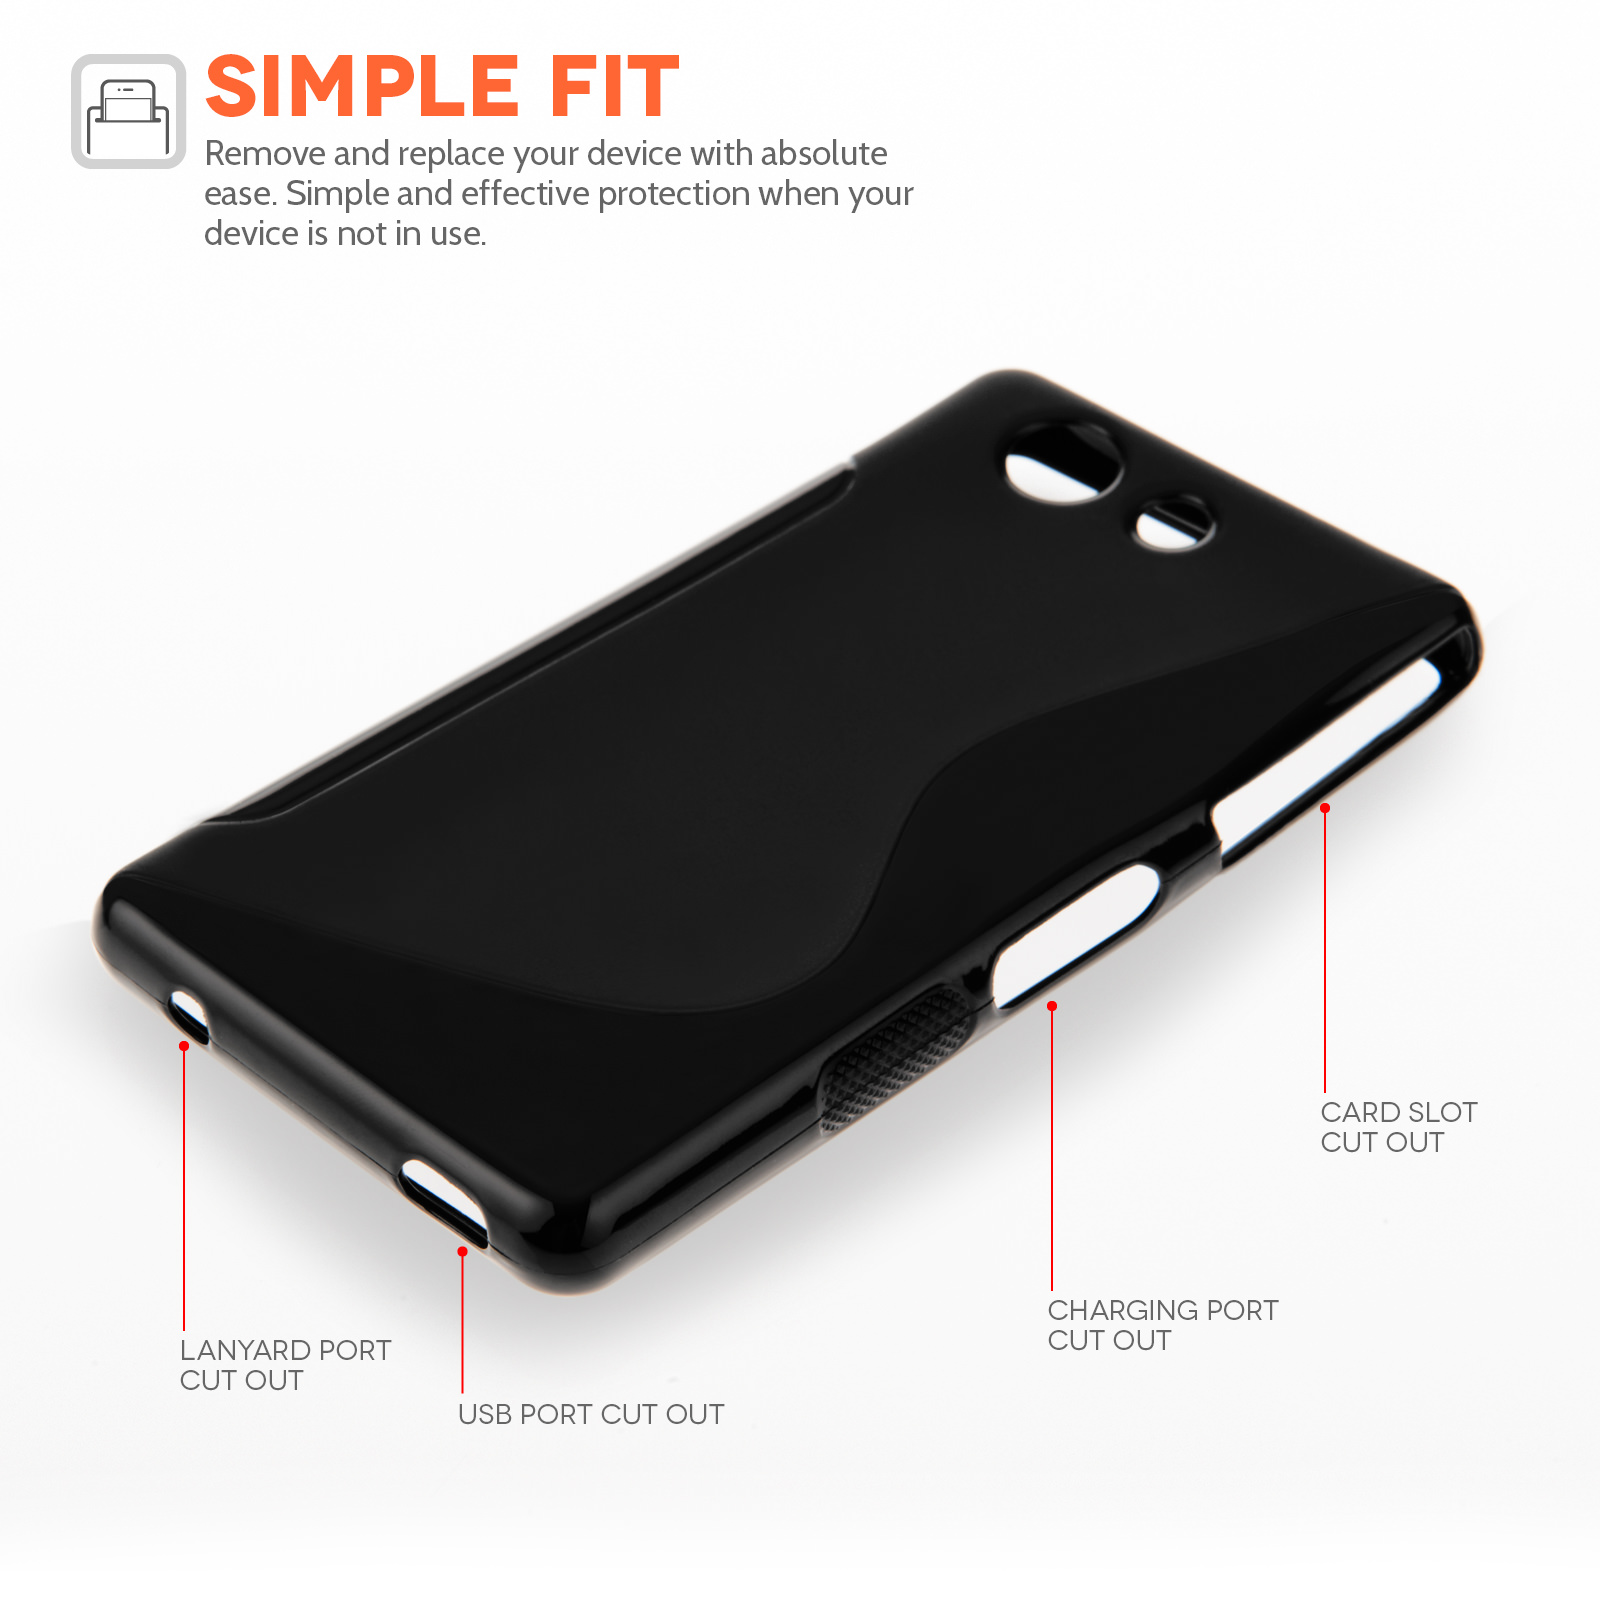 Caseflex Sony Xperia Z4 Compact Silicone Gel S-Line Case - Black